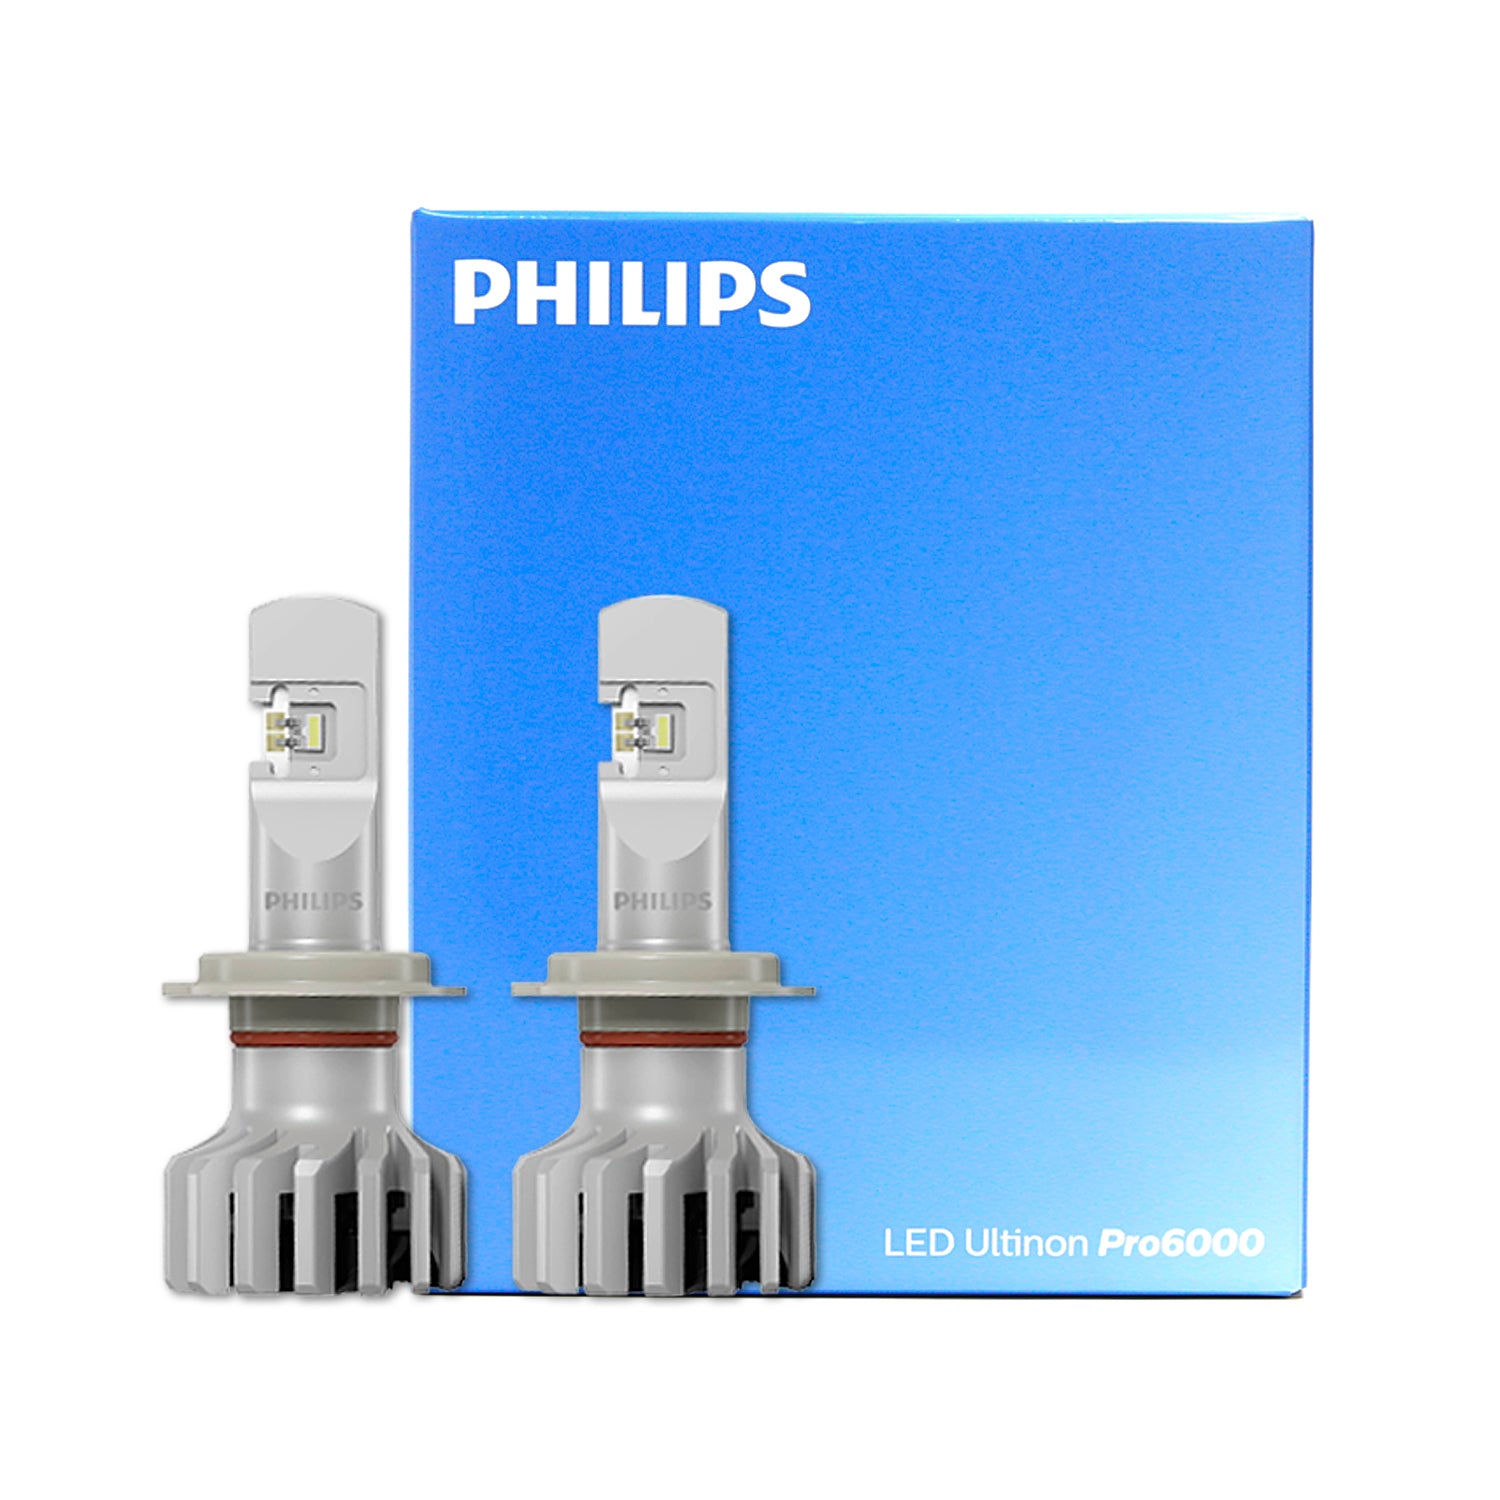 Philips Ultinon Pro6000 H4-LED, 2er-Pack Box ab € 95,80 (2024)